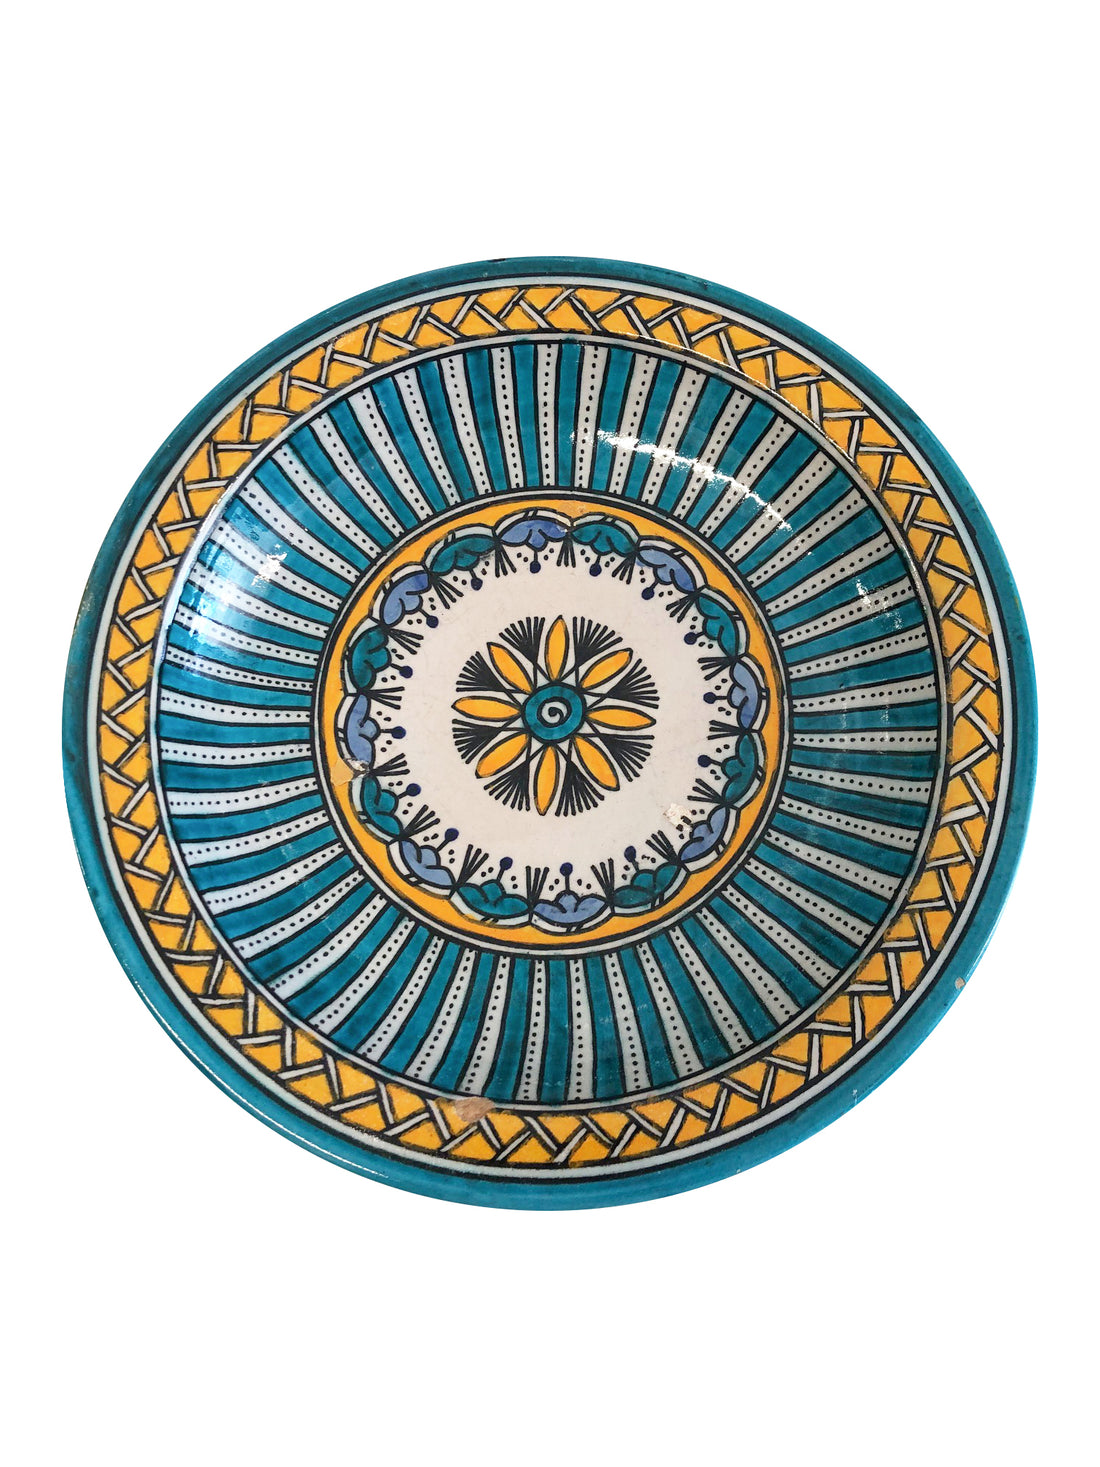 Moroccan Plates